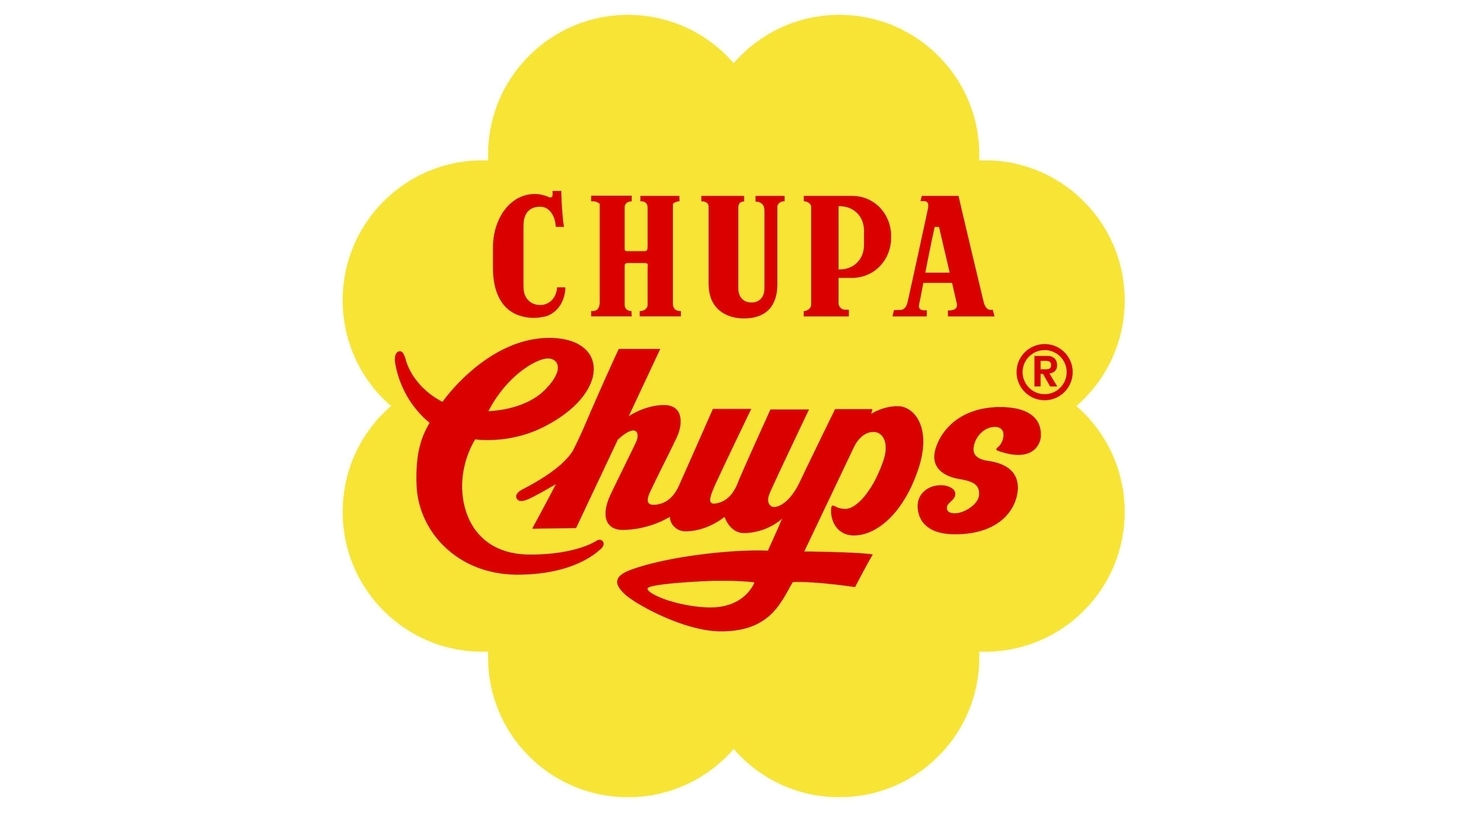 Chupa chups symbol